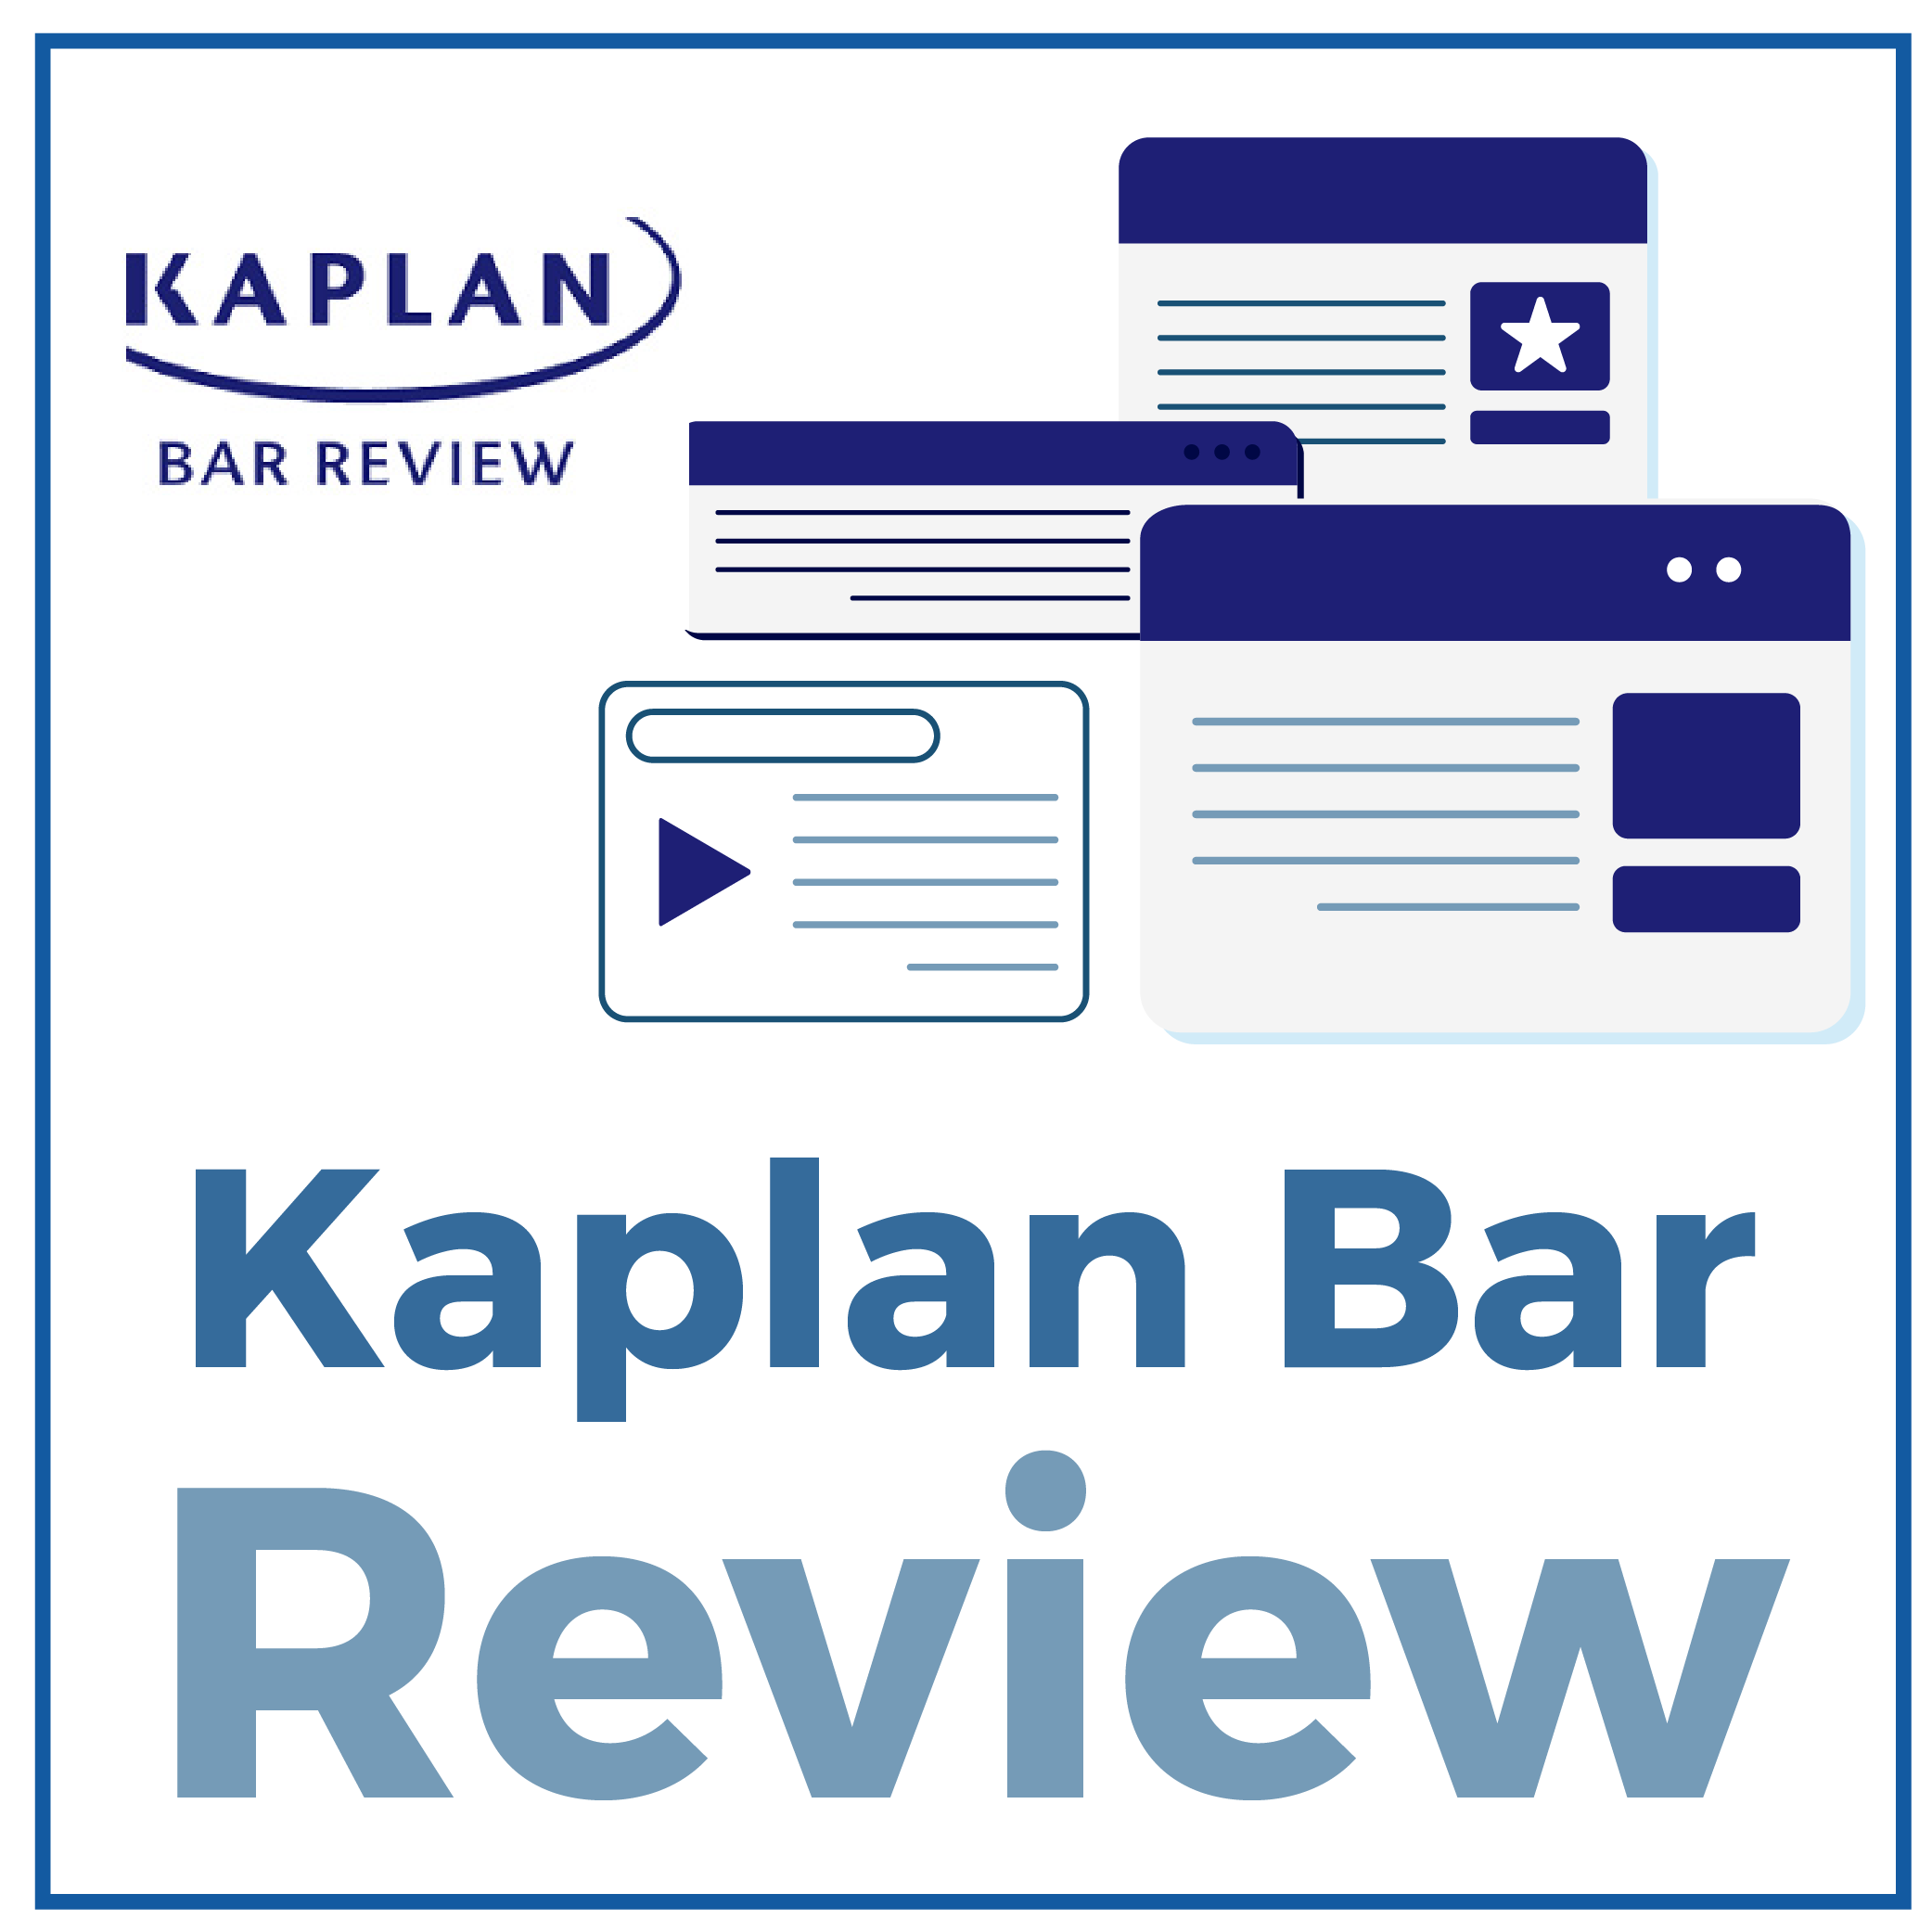 Kaplan Bar Review Schedule 2022 Kaplan Bar Review - Crush The Bar Exam 2022